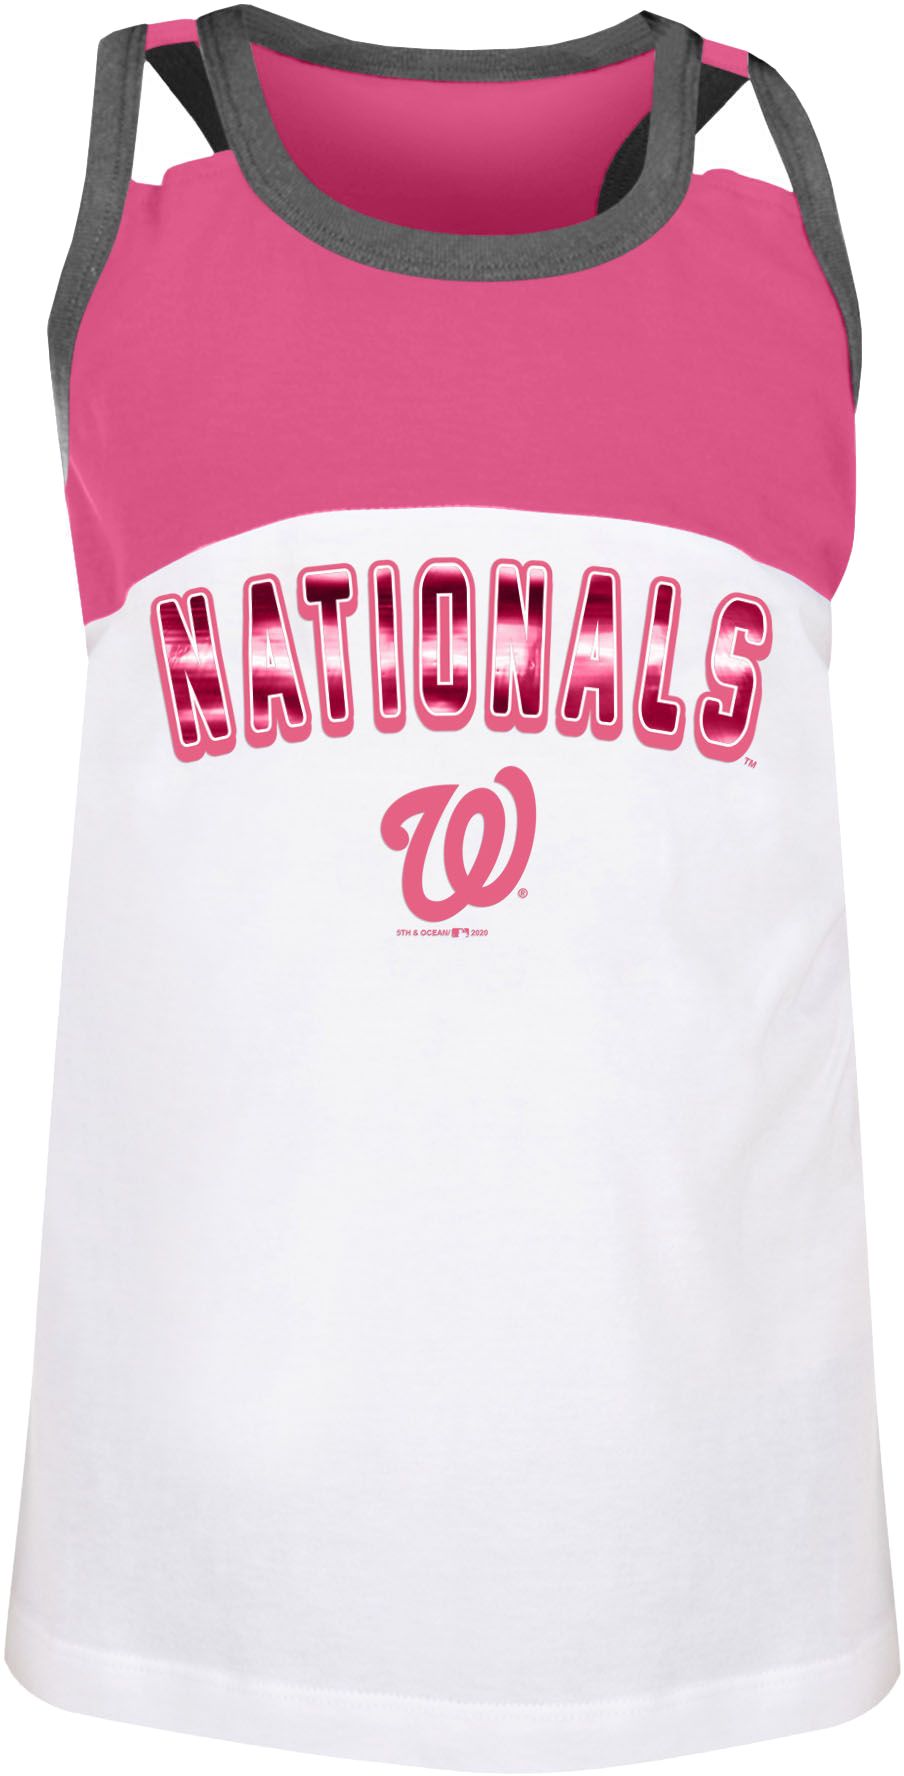 New Era / Youth Girls' Washington Nationals Pink Spandex Baby